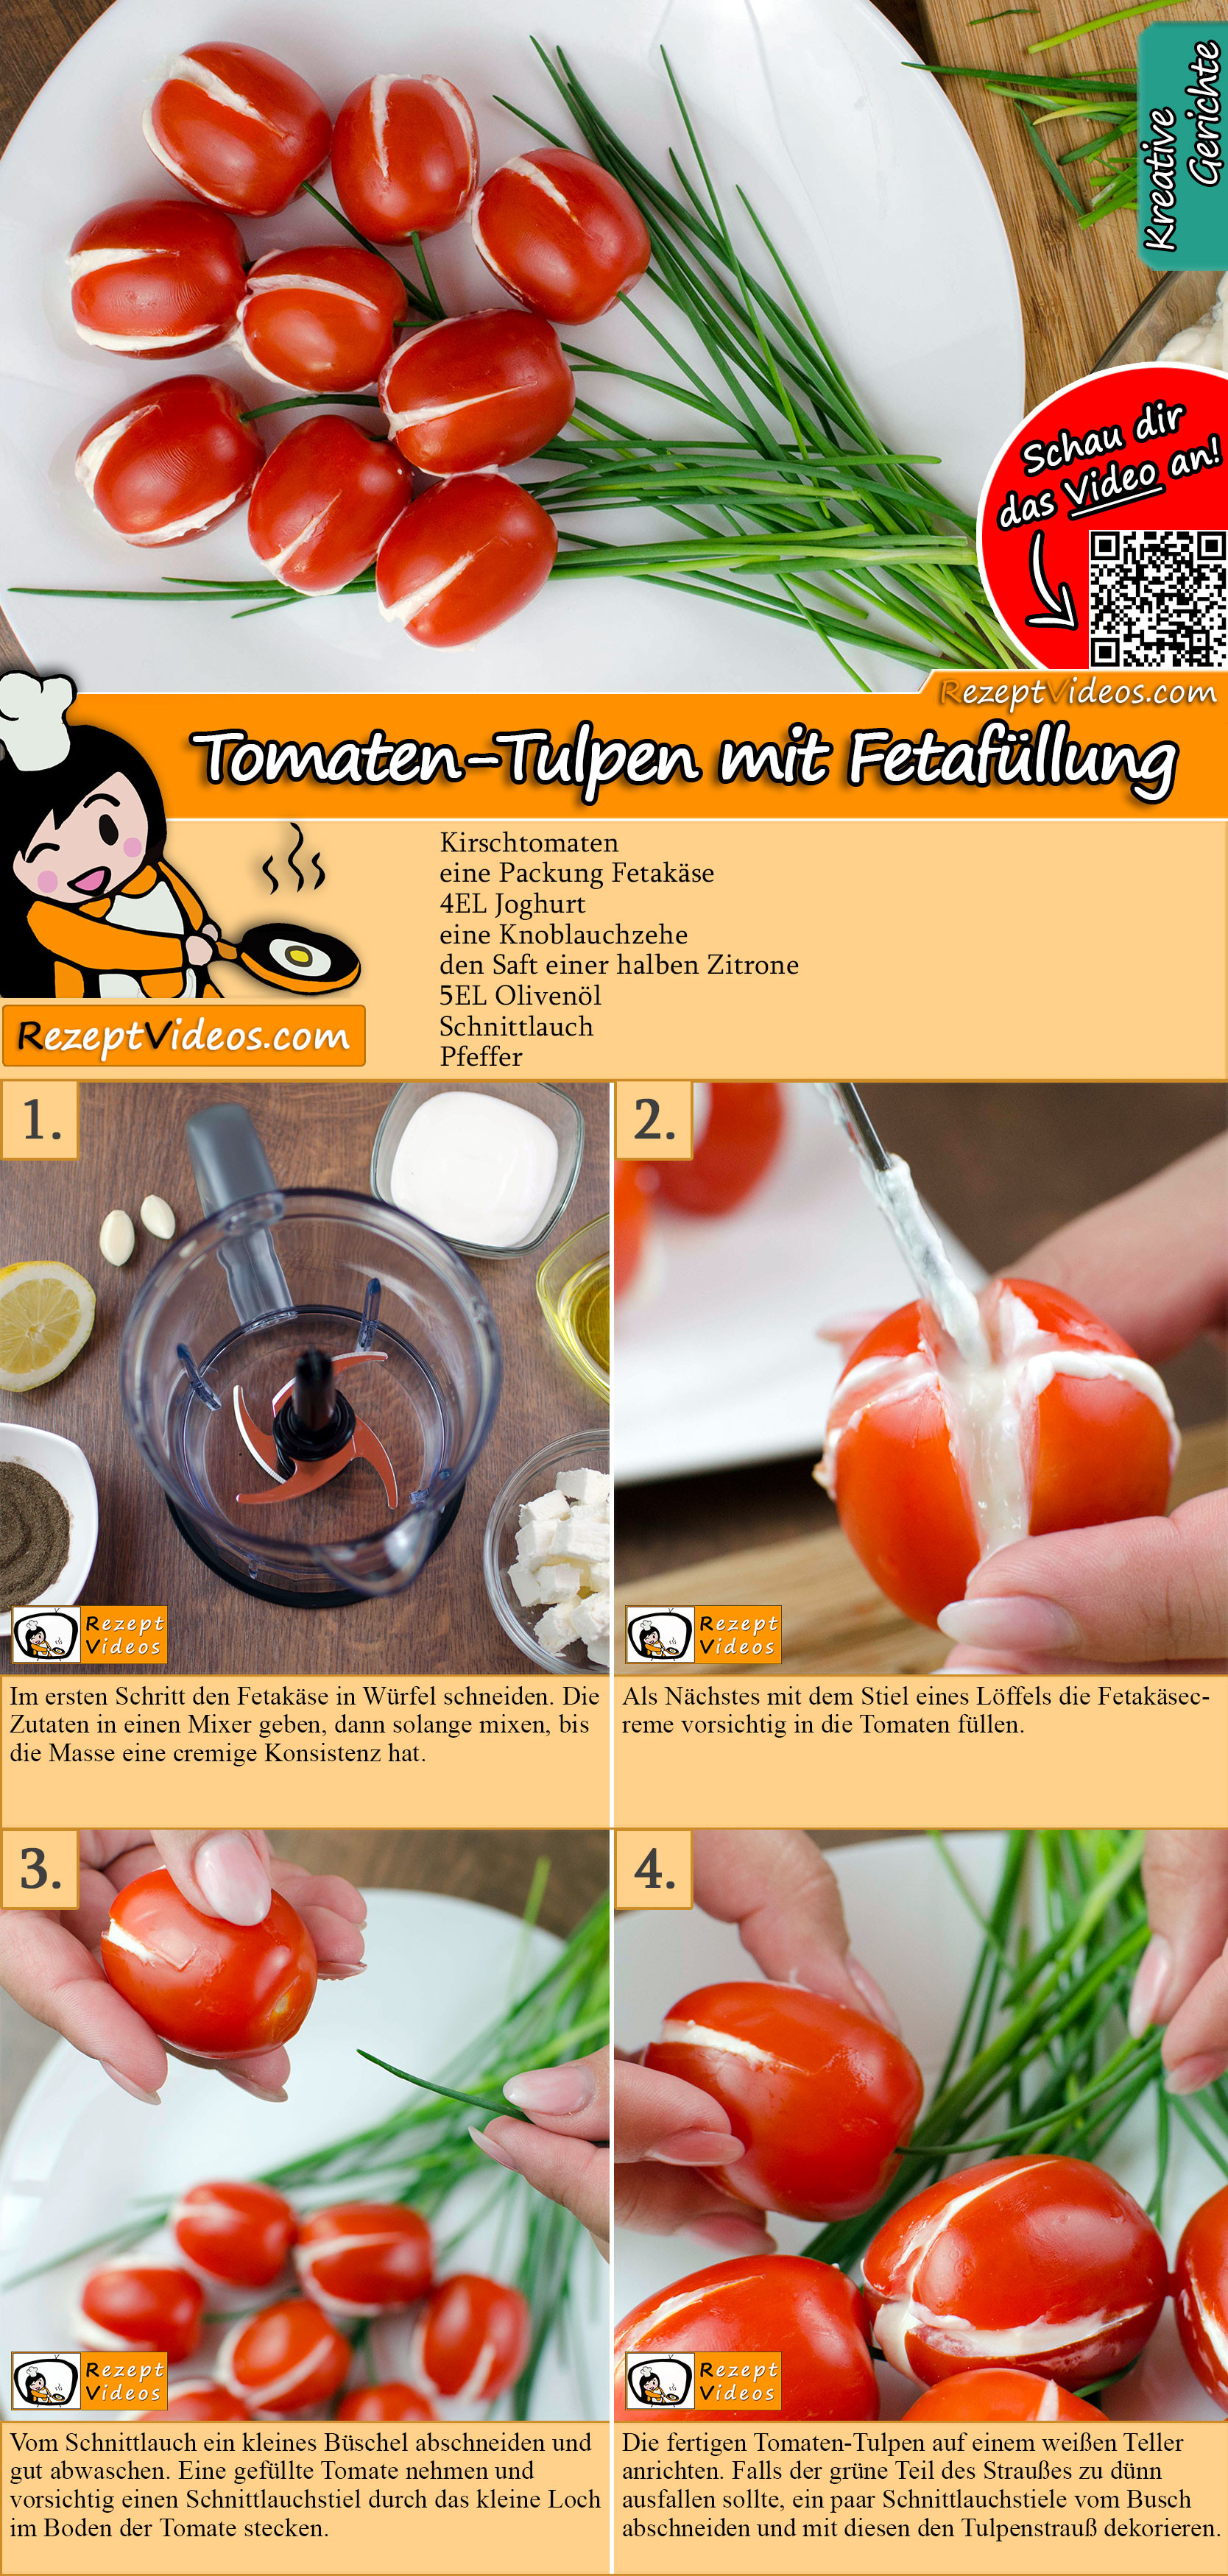 Tomaten-Tulpen mit Fetafüllung Rezept mit Video